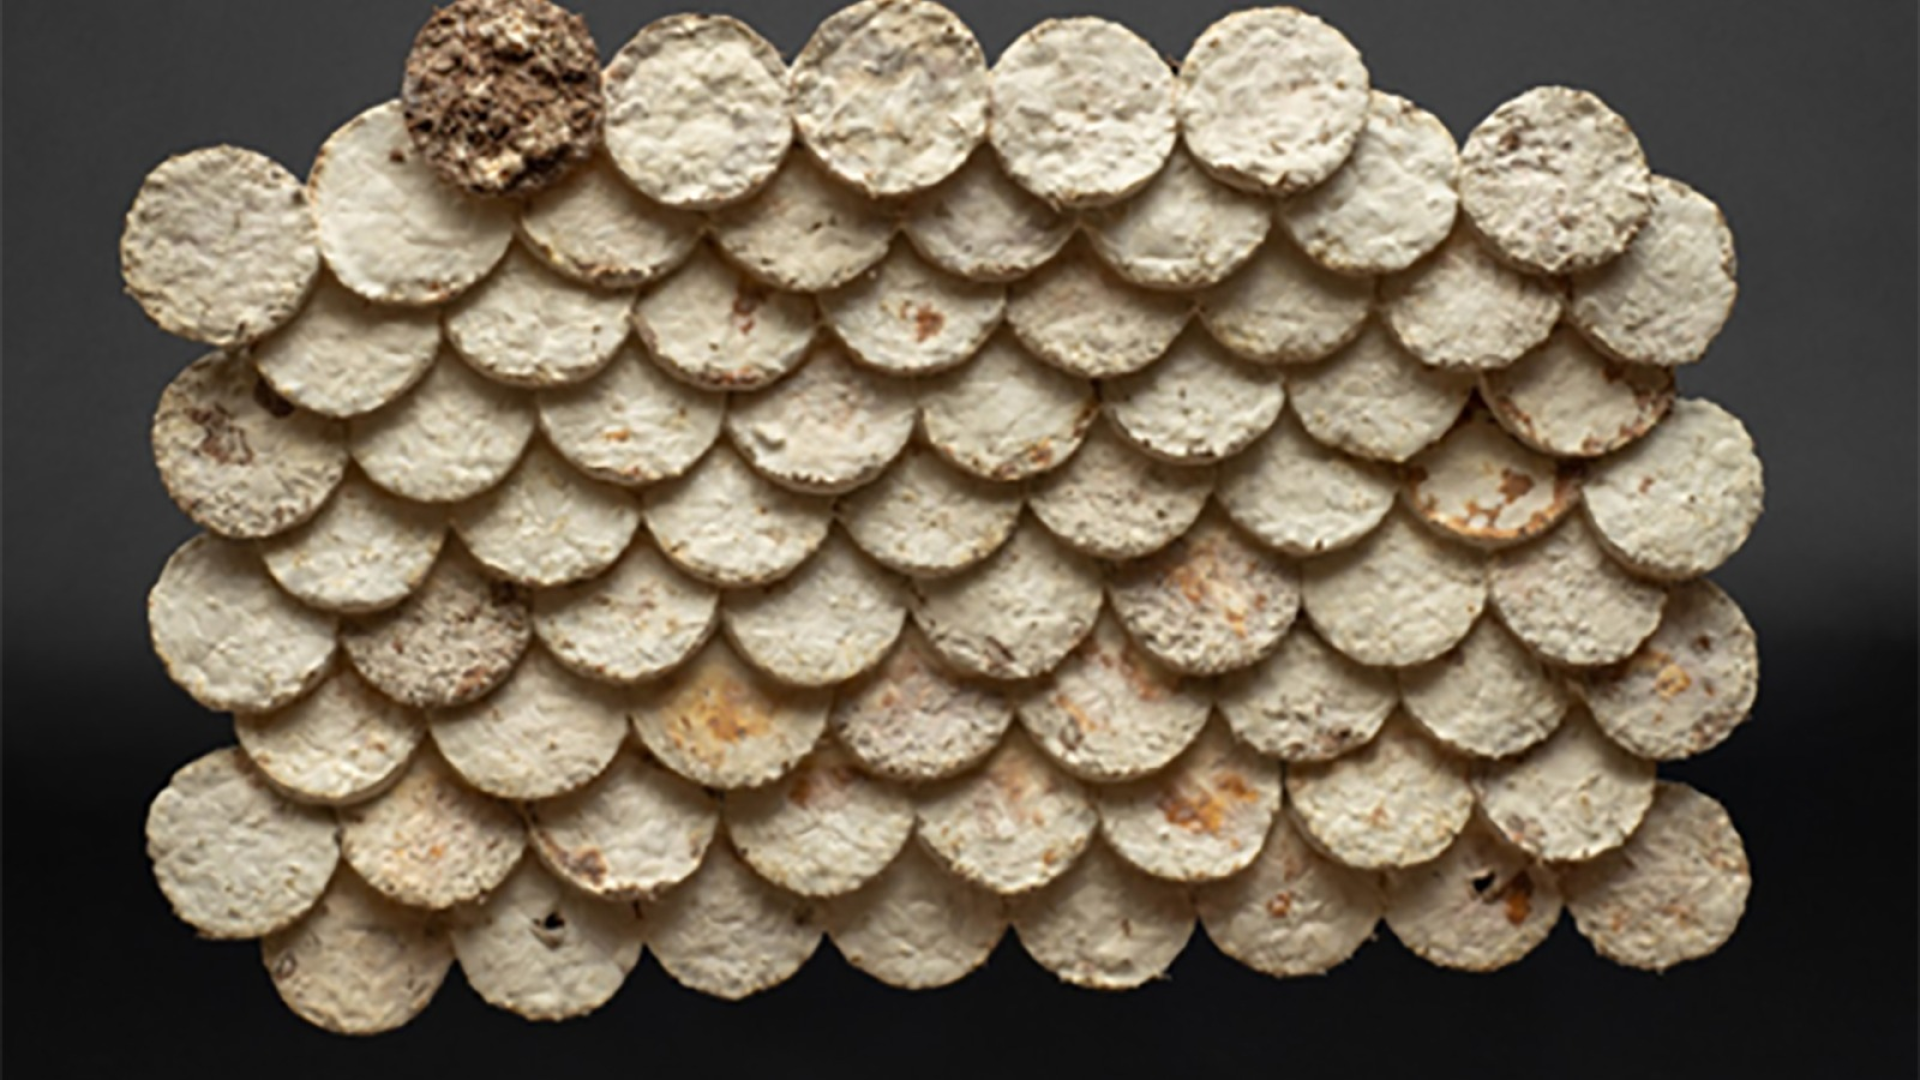 Photo of Mycelium tiles as a wall screen